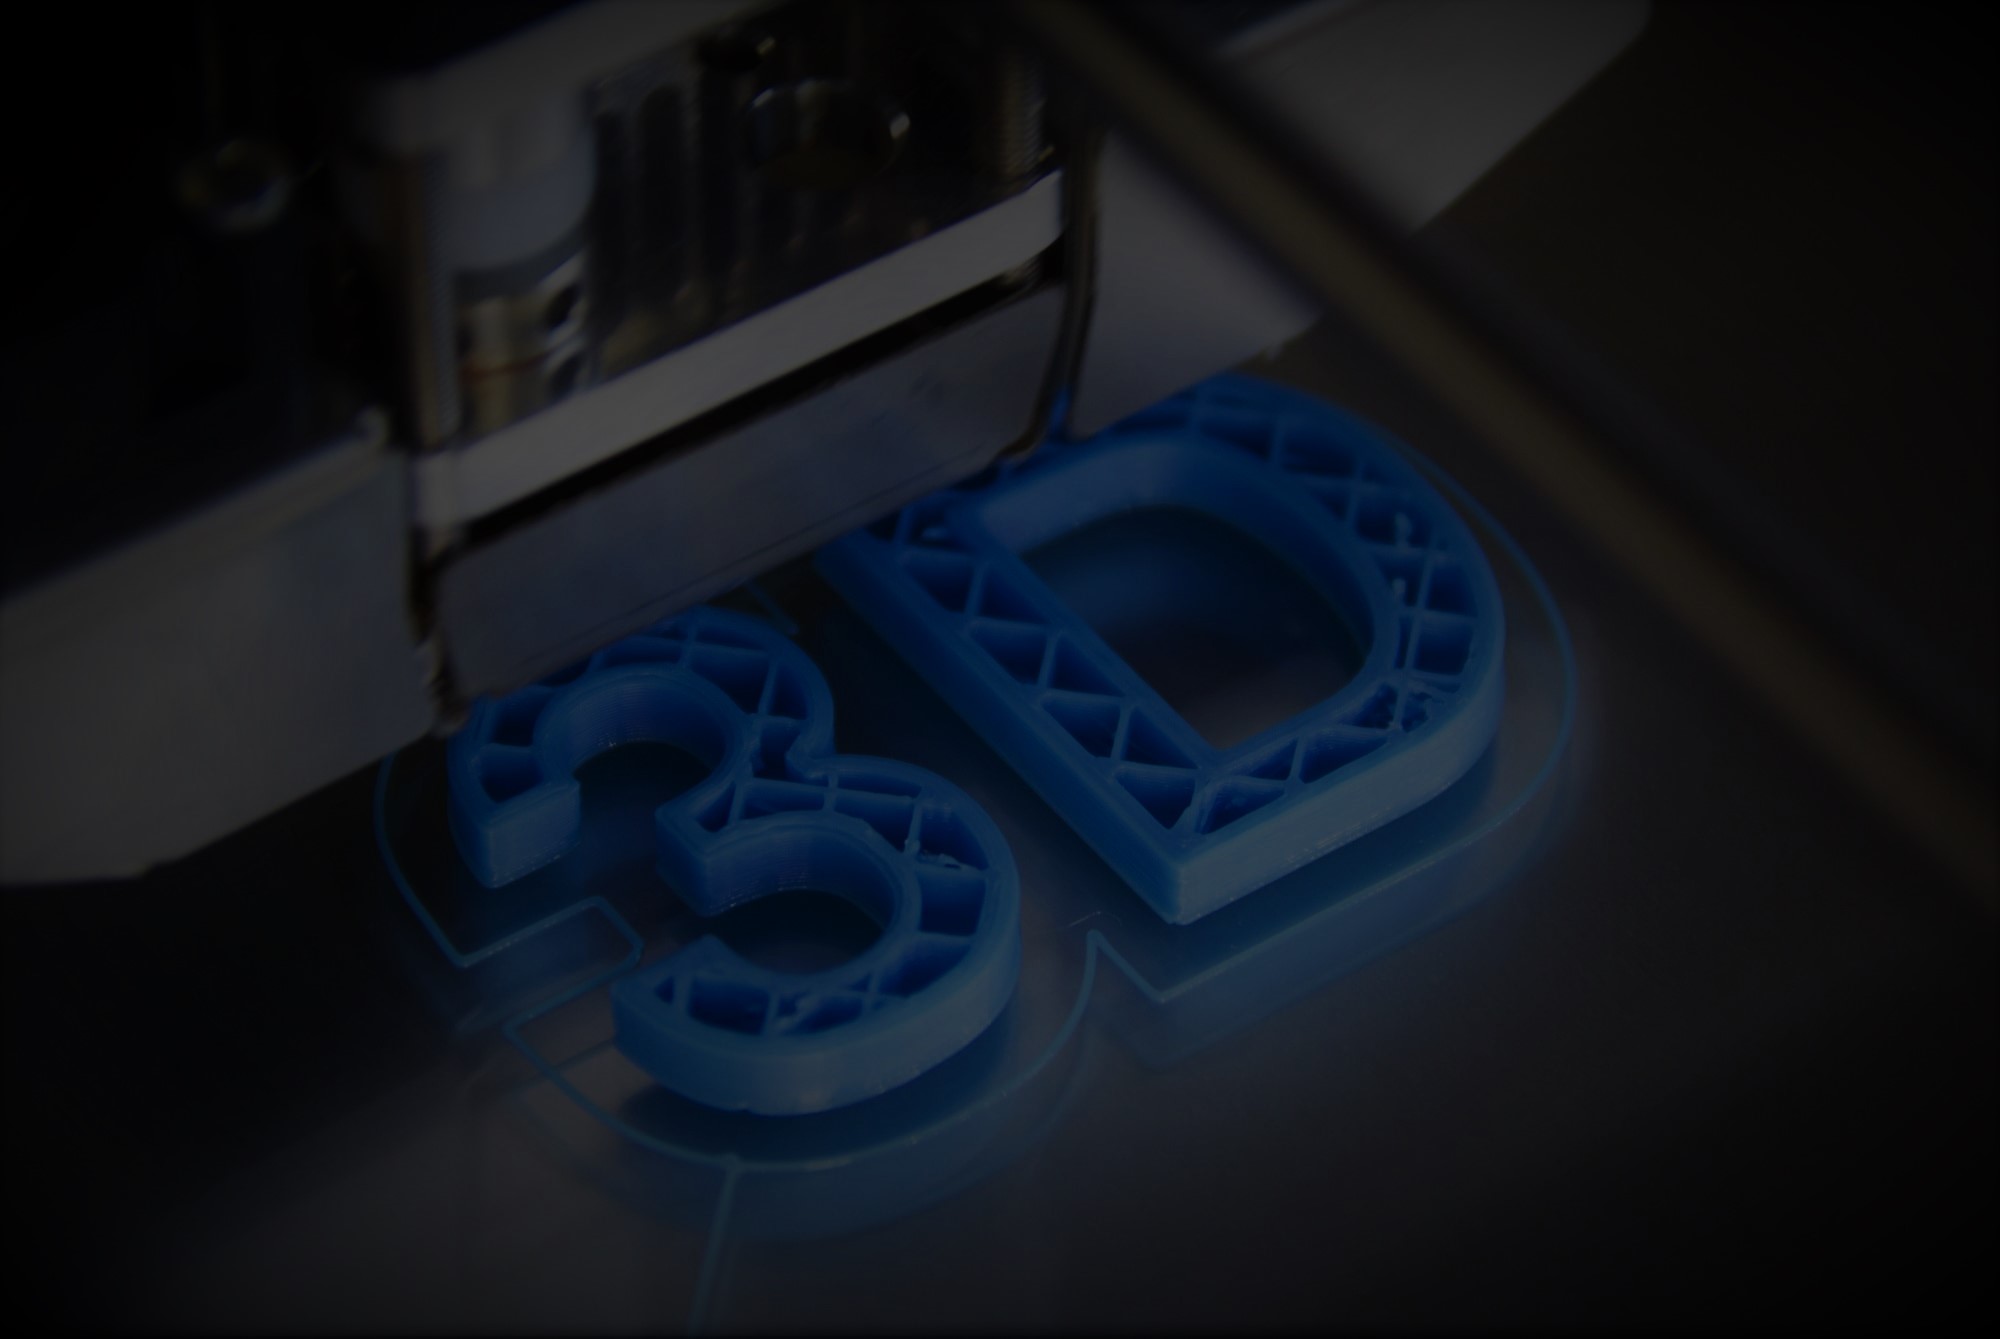 Услуги 3D печати